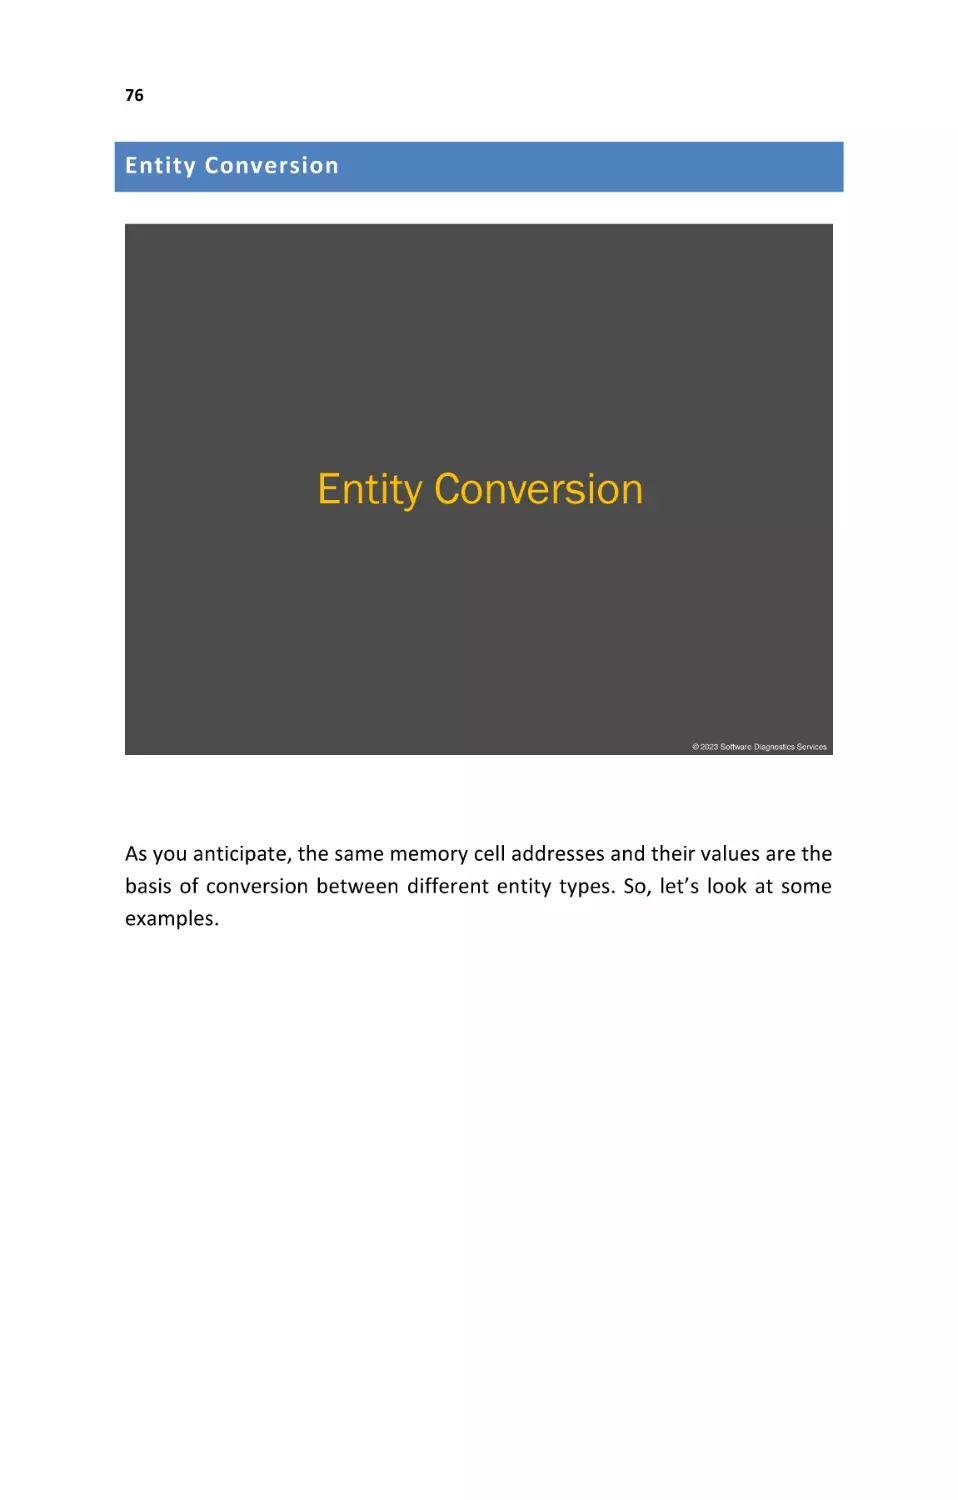 Entity Conversion